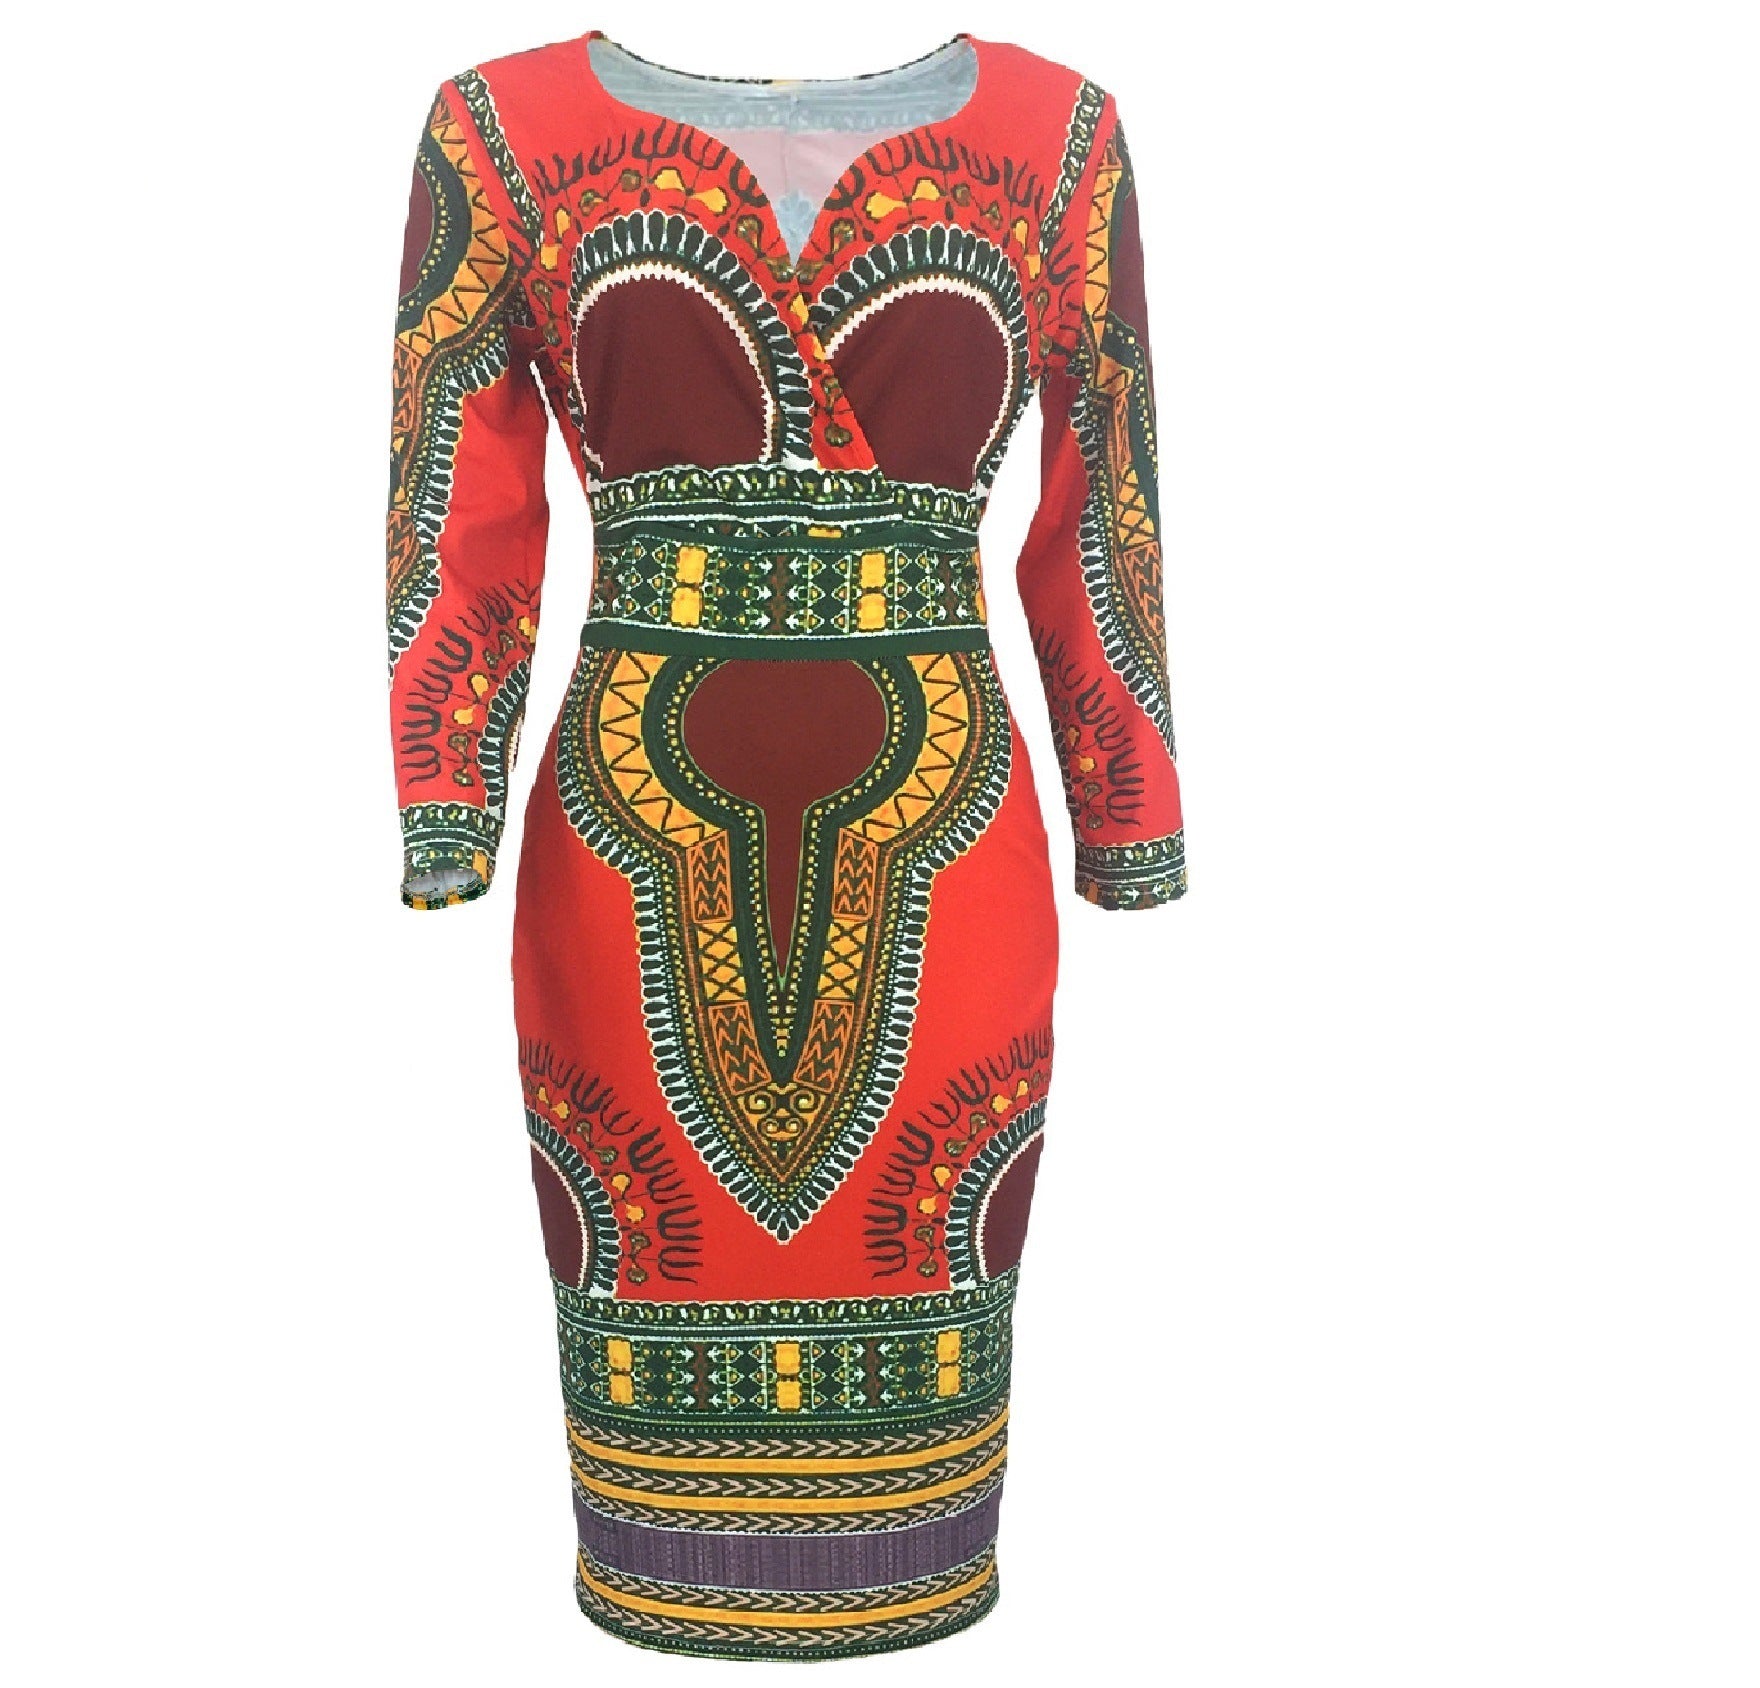 Body élégant avec robe africaine Dashiki